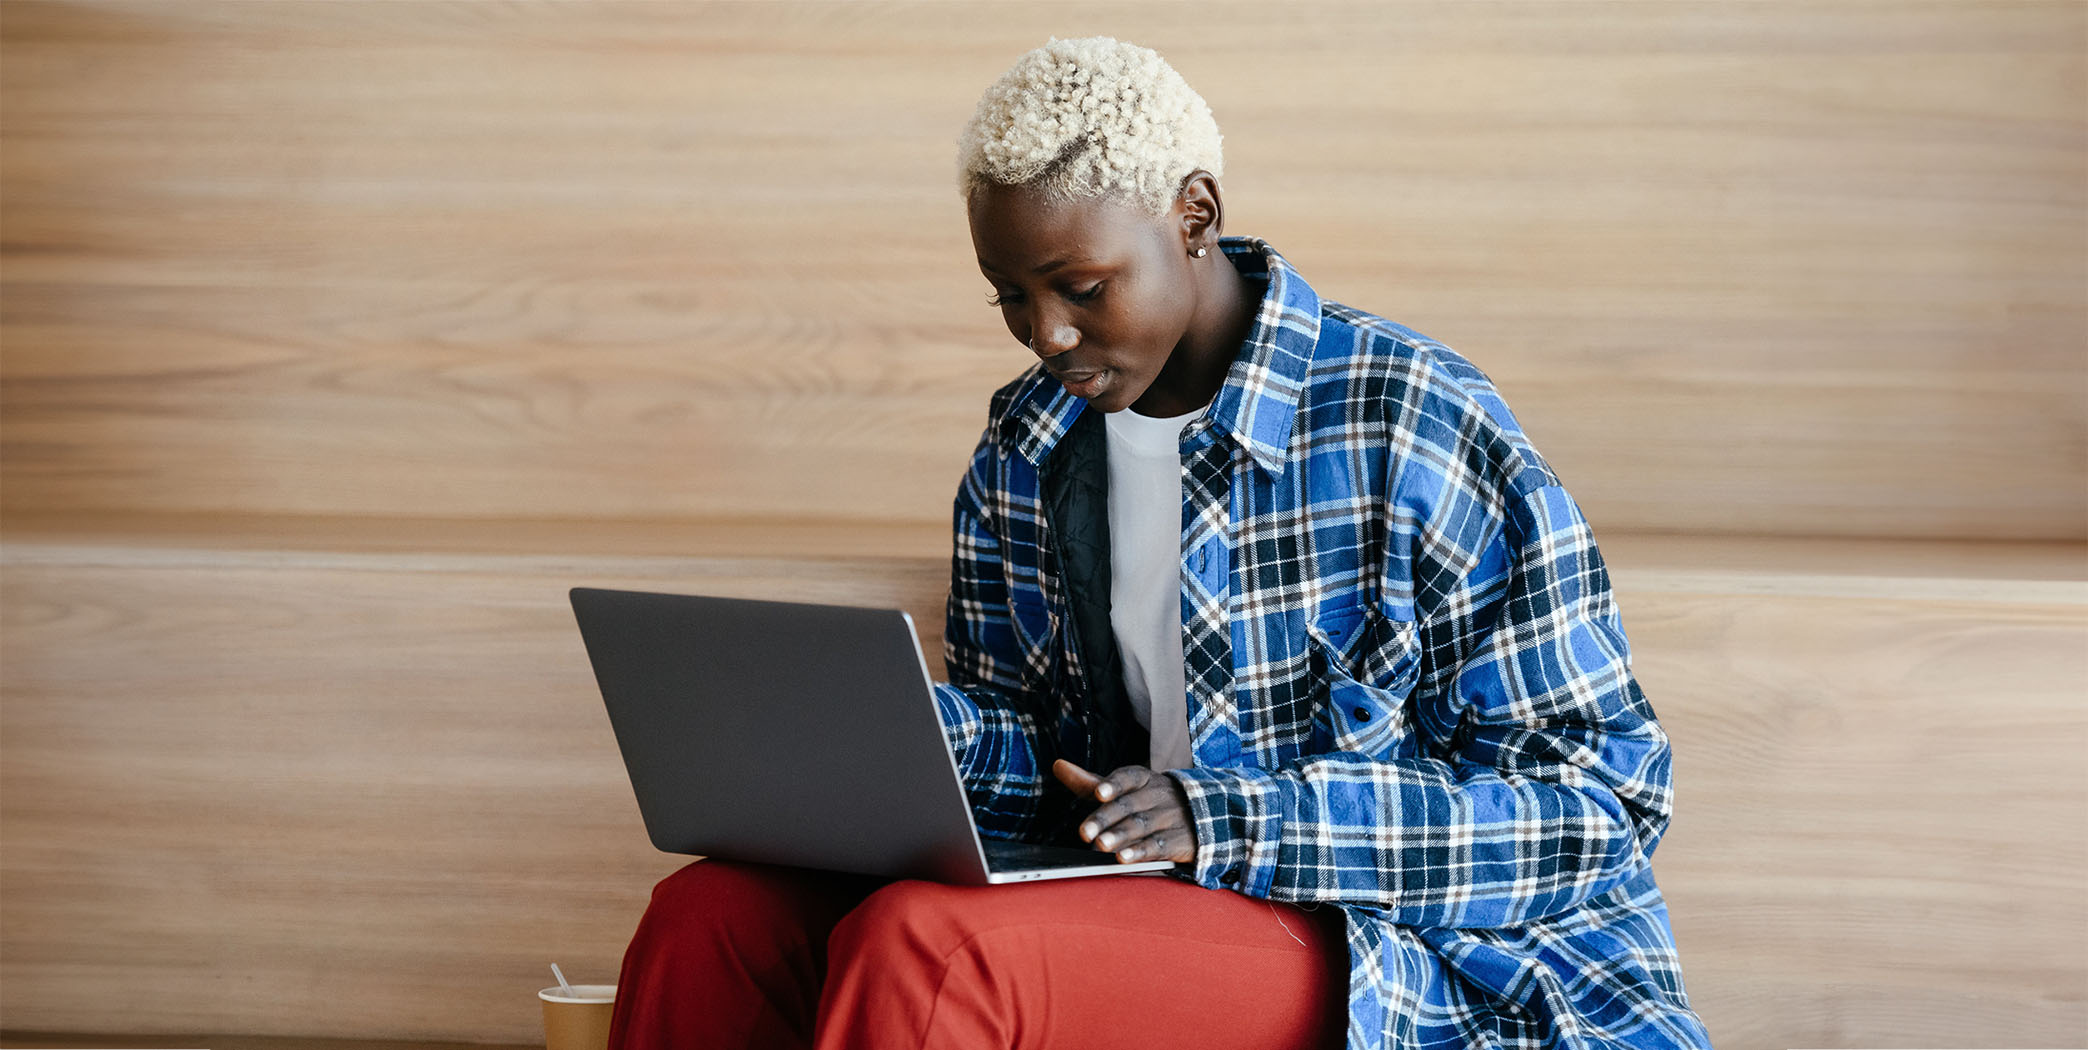 African American woman using laptop